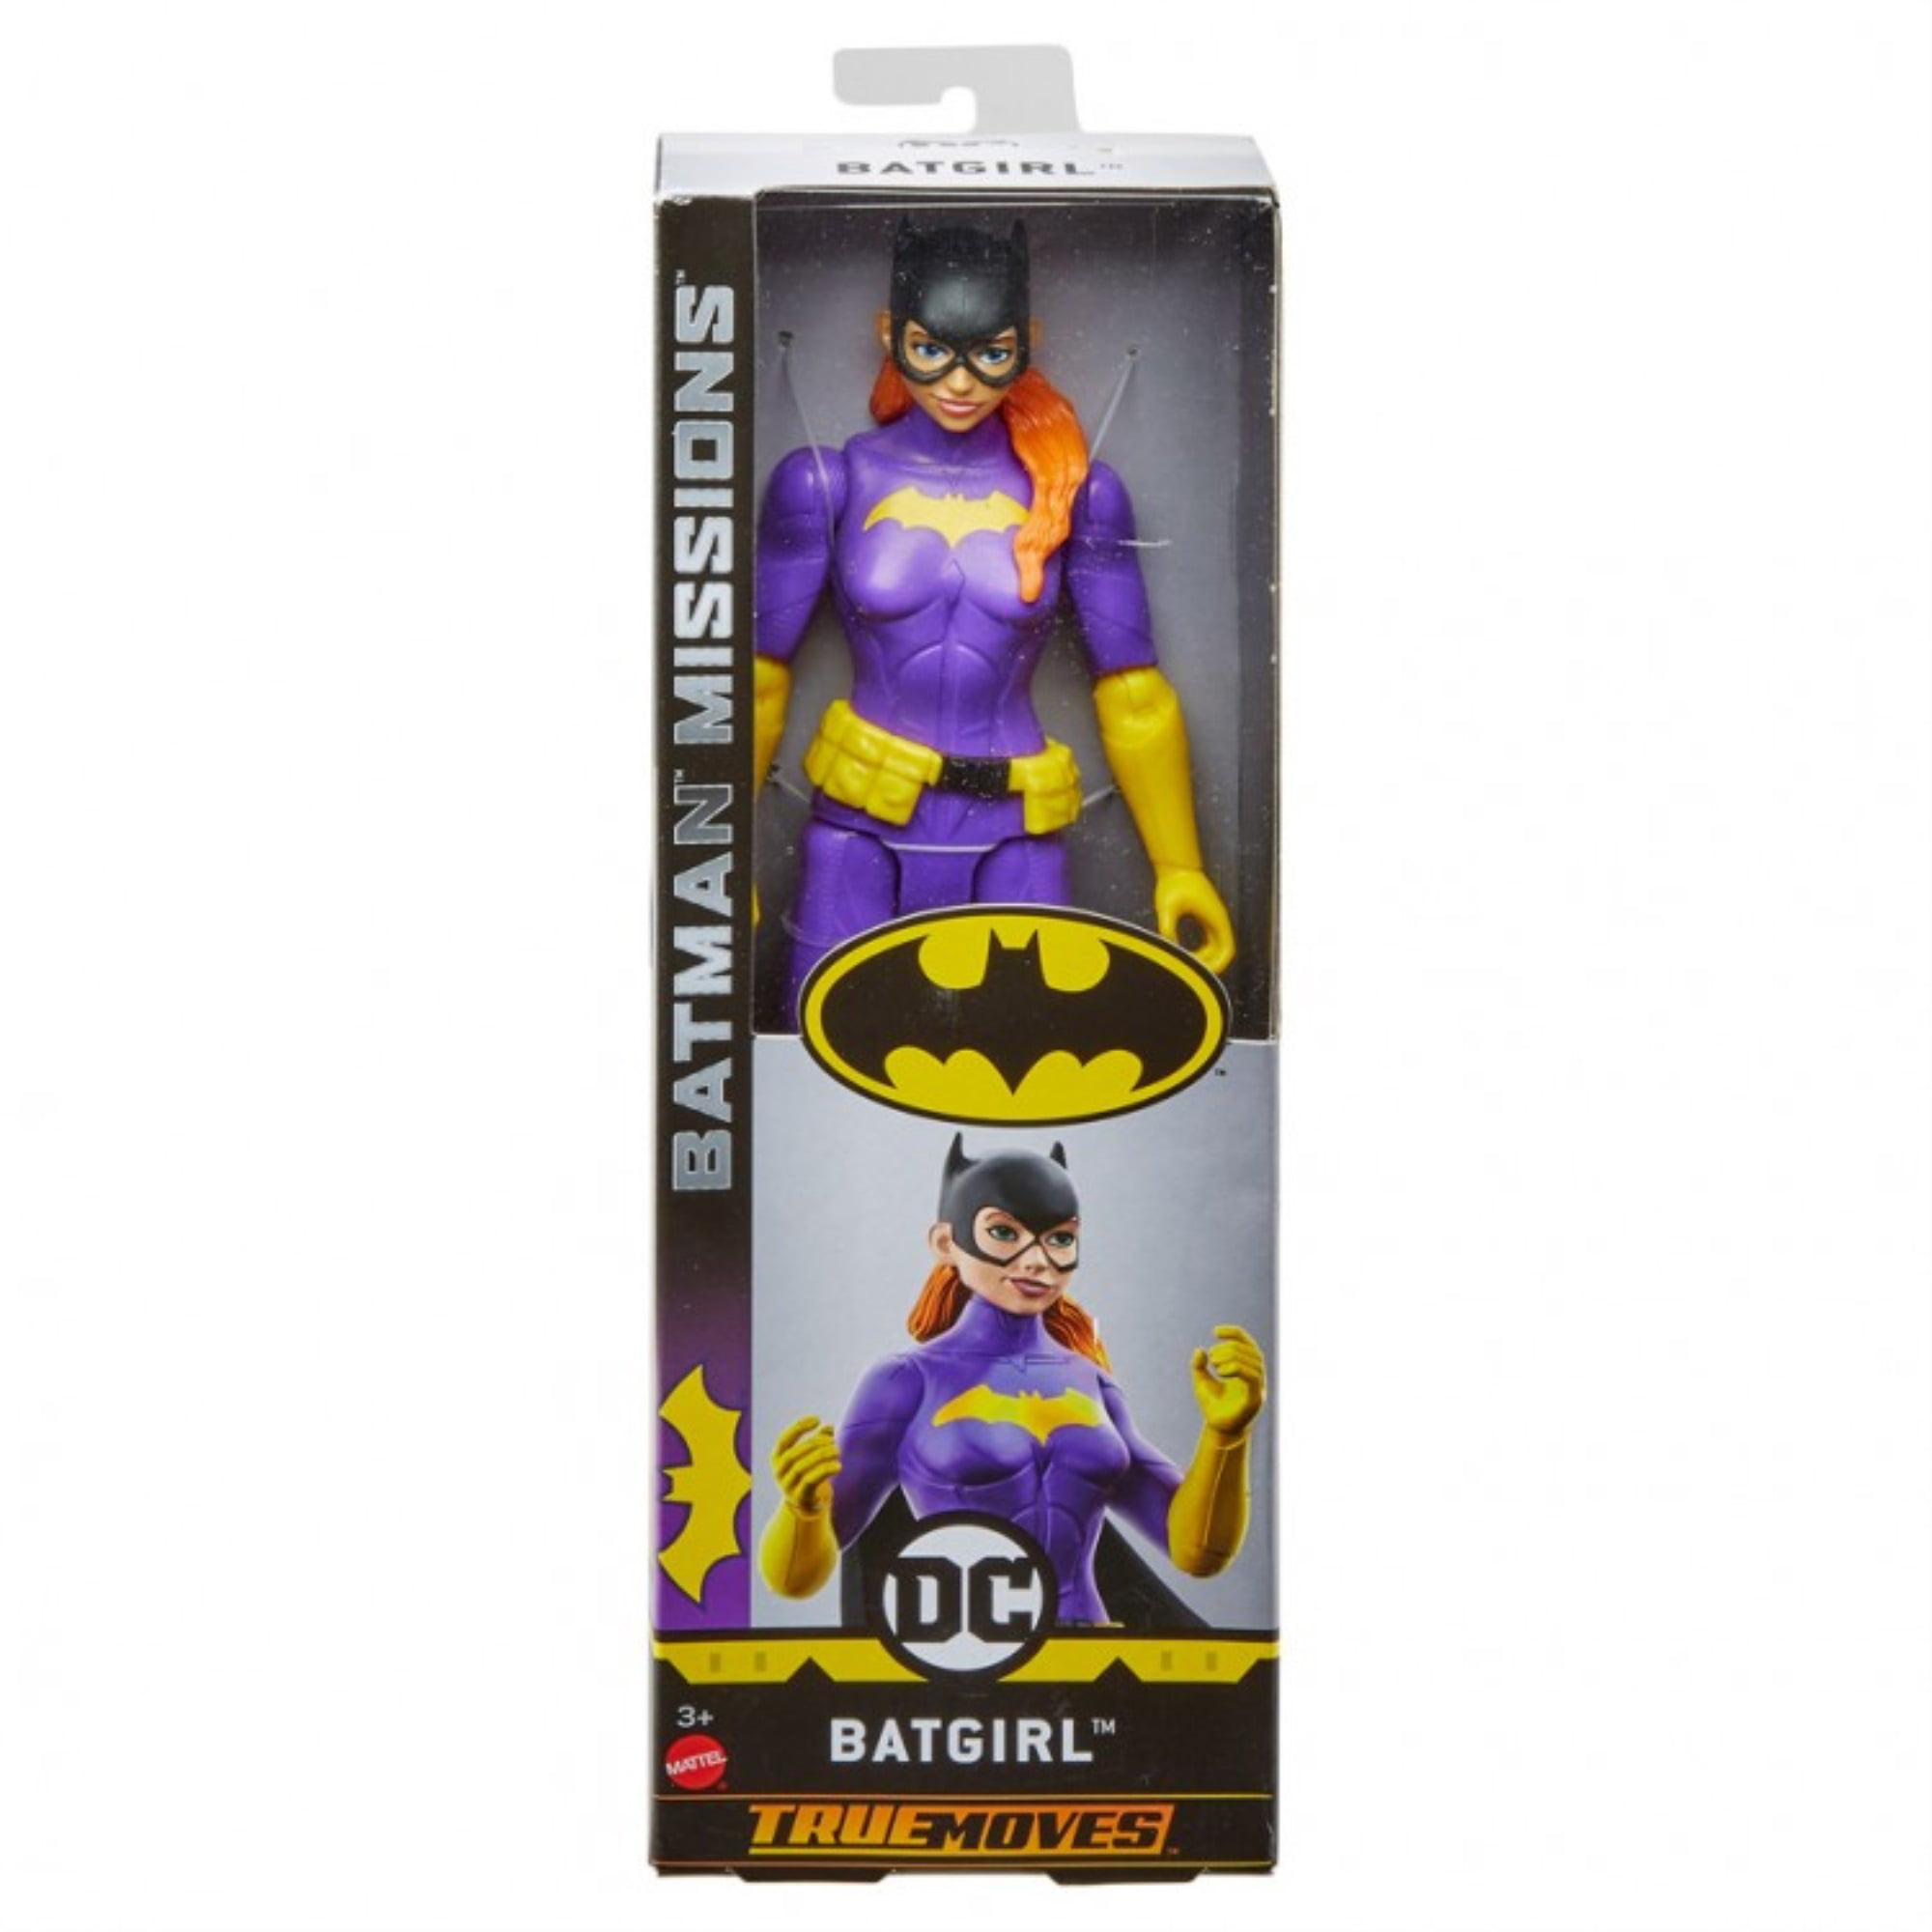 DC Comics Mini-Pumps 3-Inch Shoe Mini-Figure Batgirl 